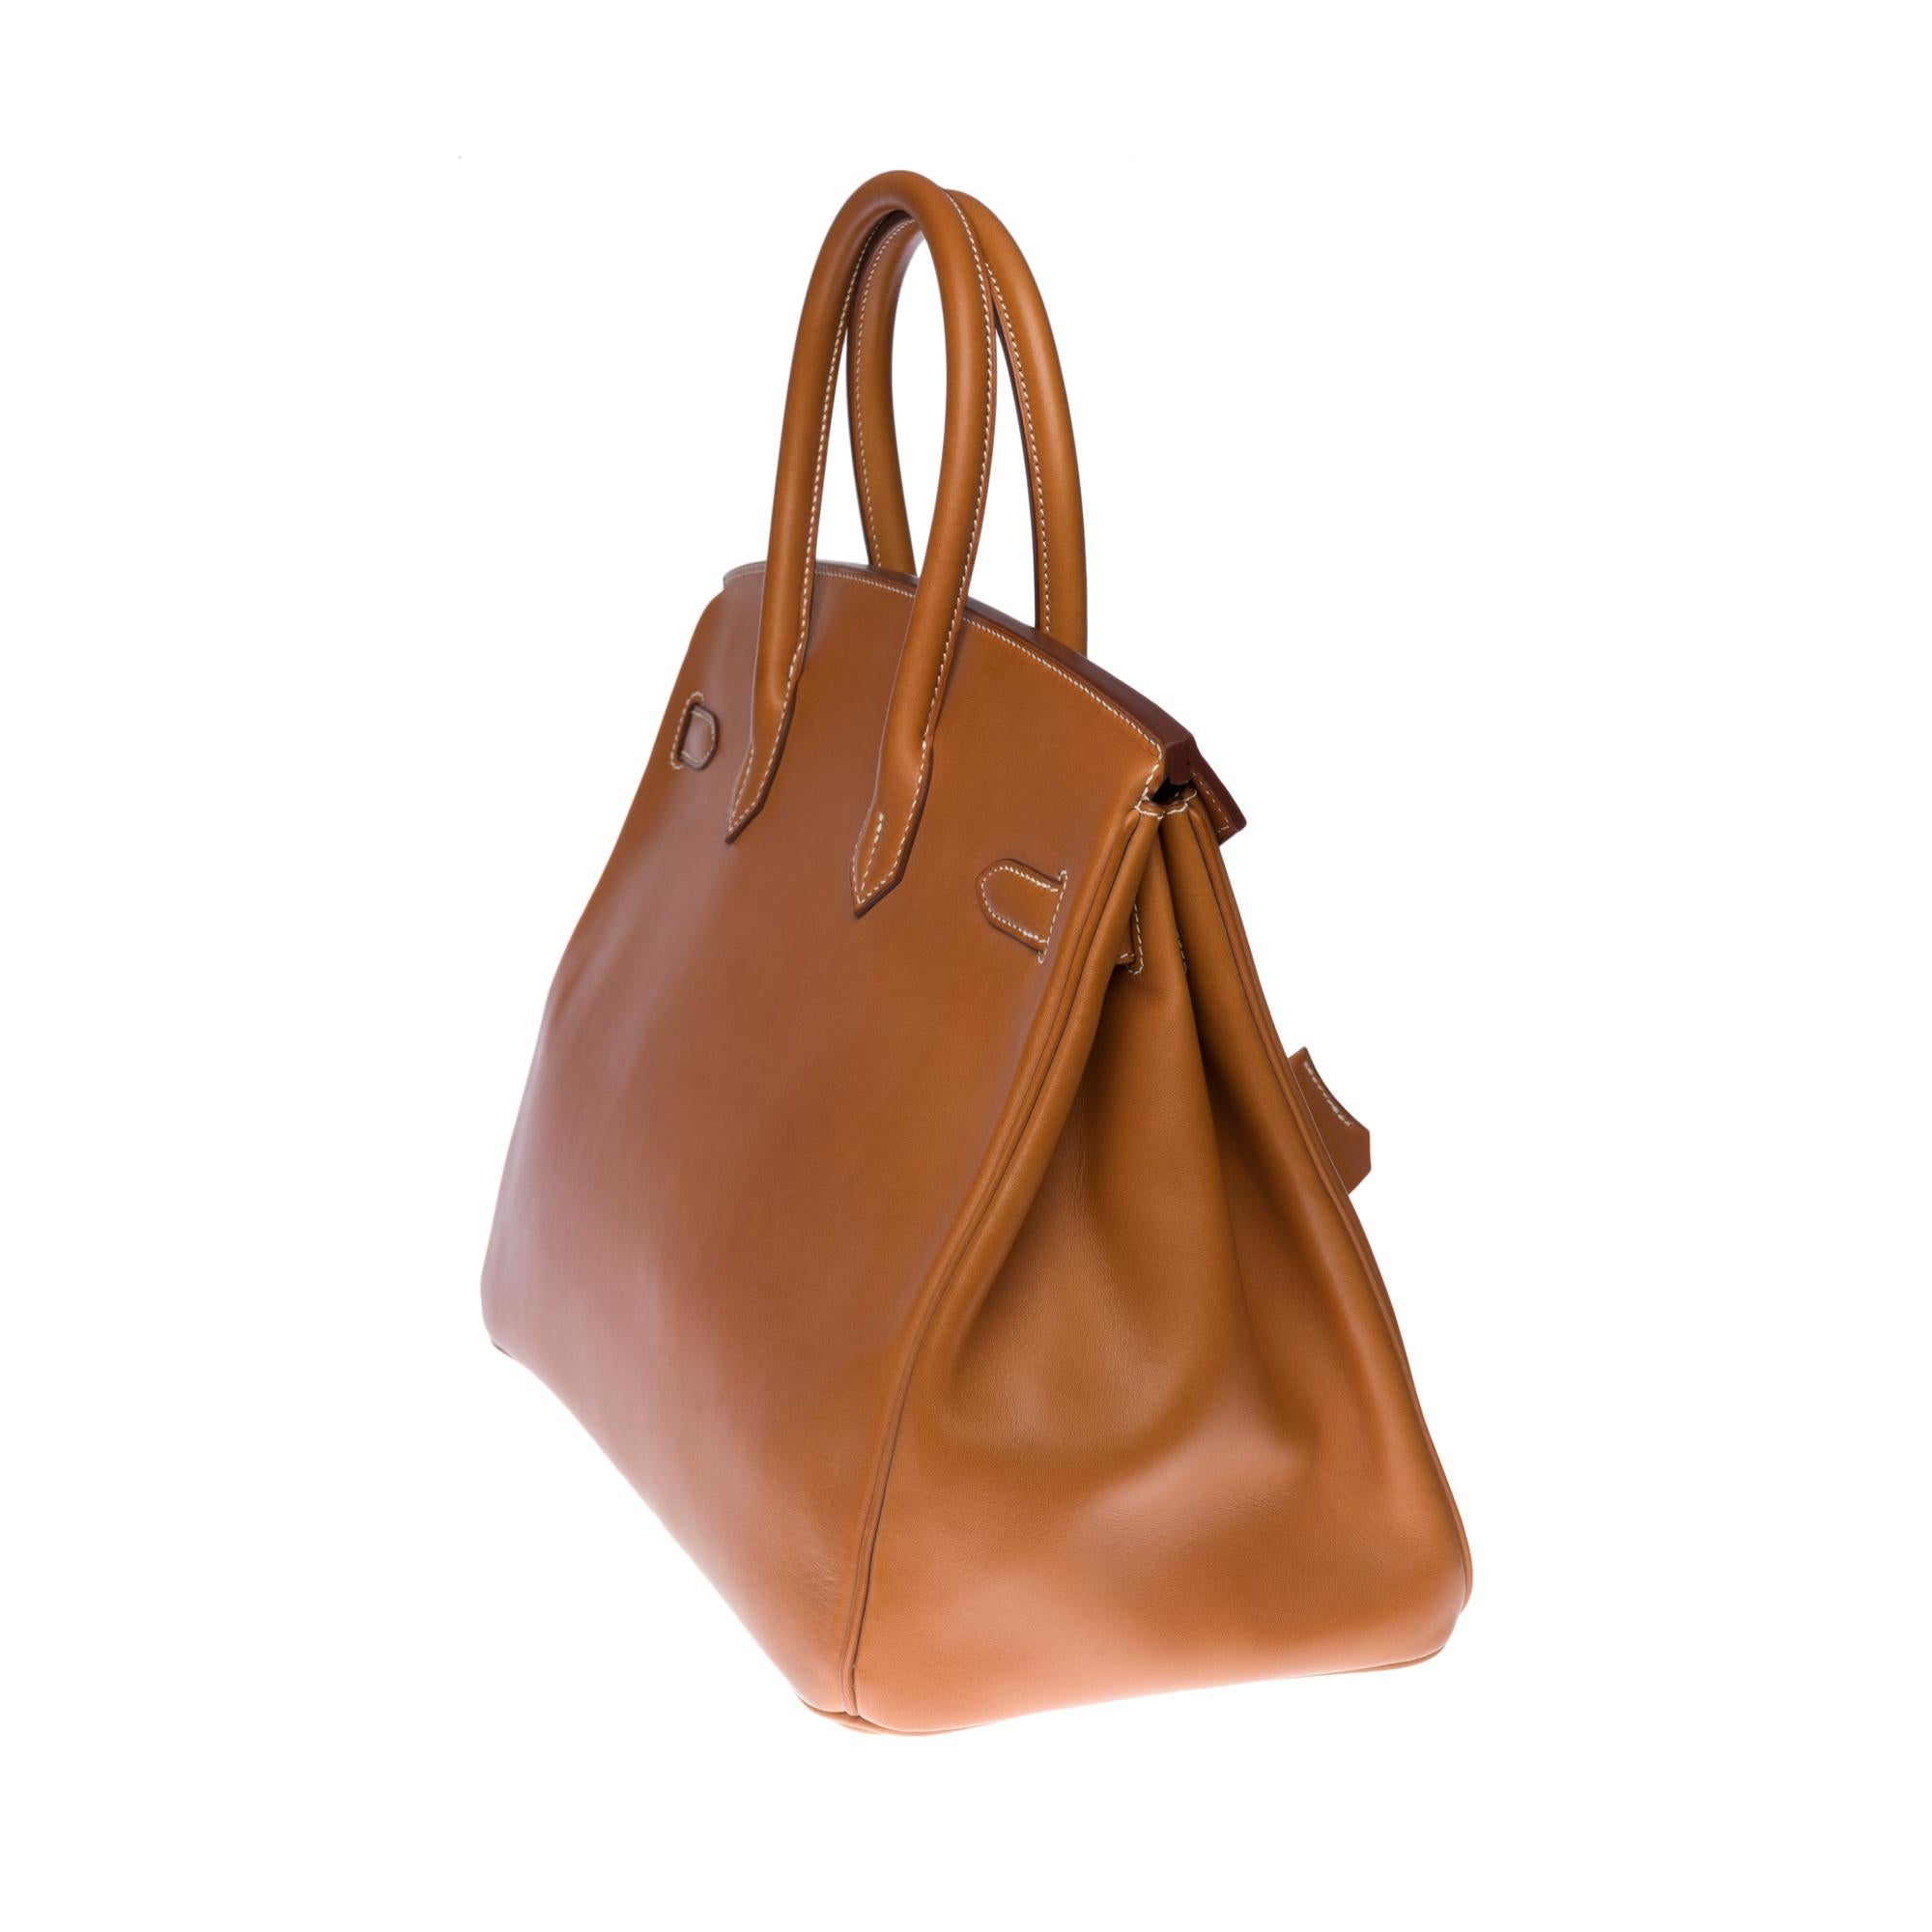 Brown NEW - ULTRA RARE- Hermès Birkin 35 handbag in Gold Barenia leather, GHW